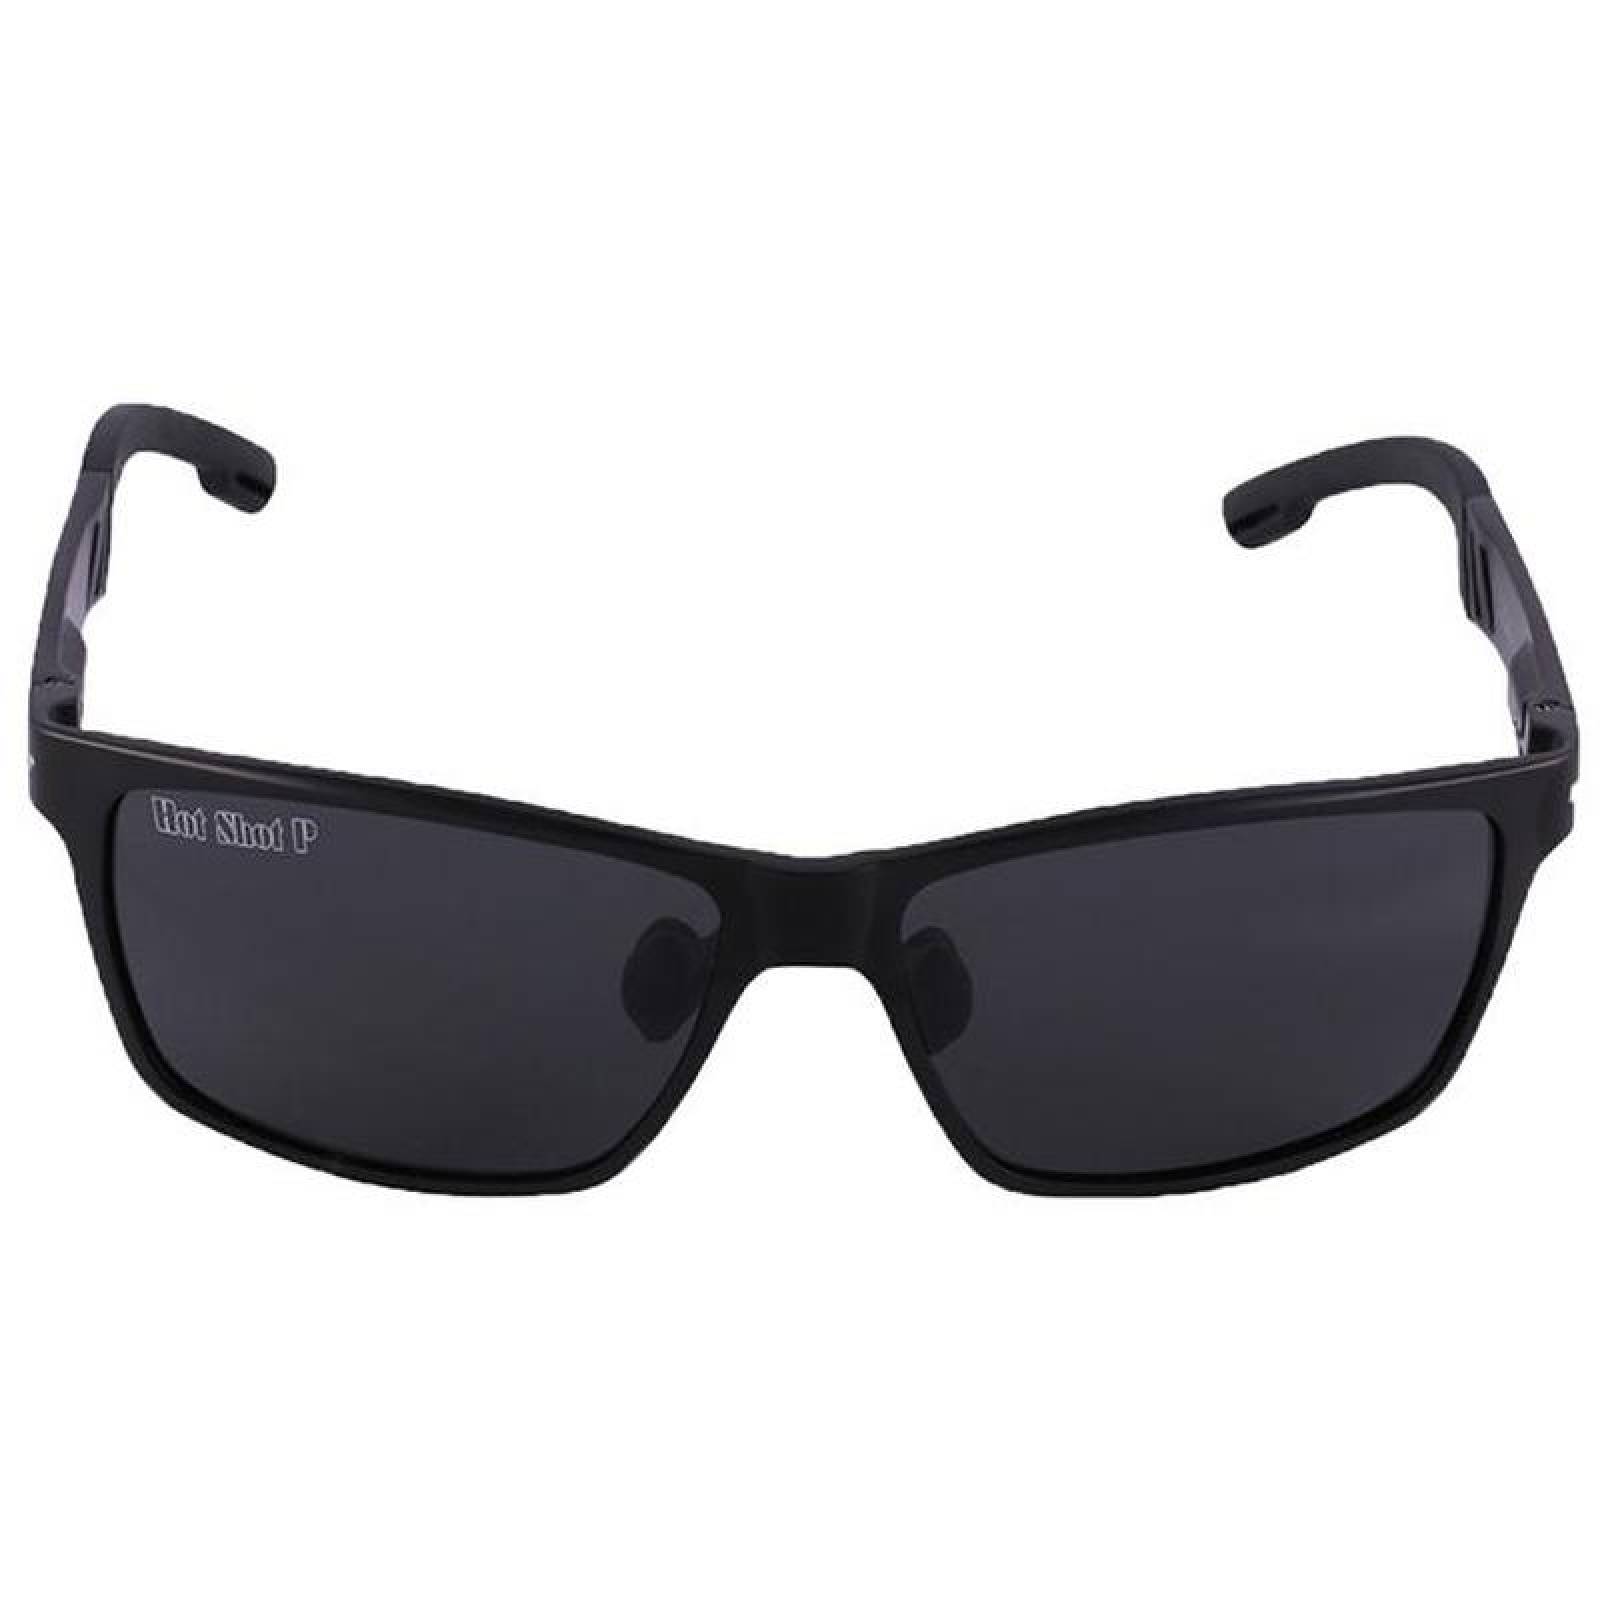 Gafas para sol Novedosas MXSPE-001-3 Aluminio Negro Unisex